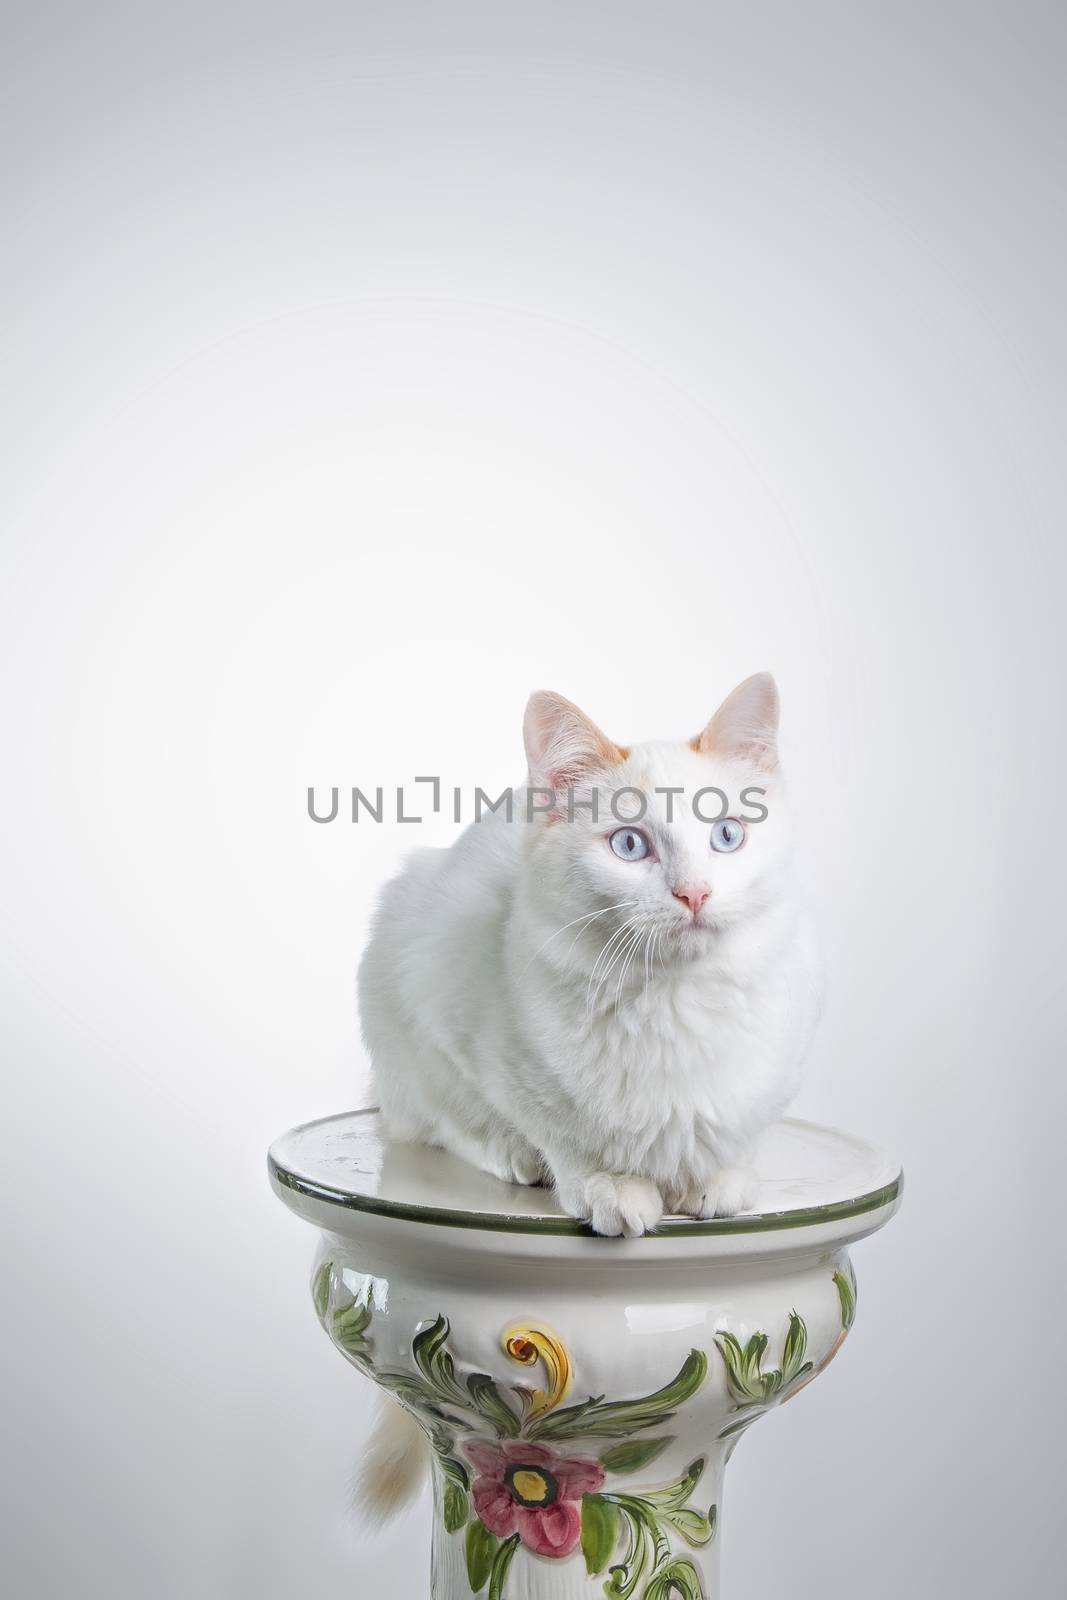 Beautiful white cat staring at the camera